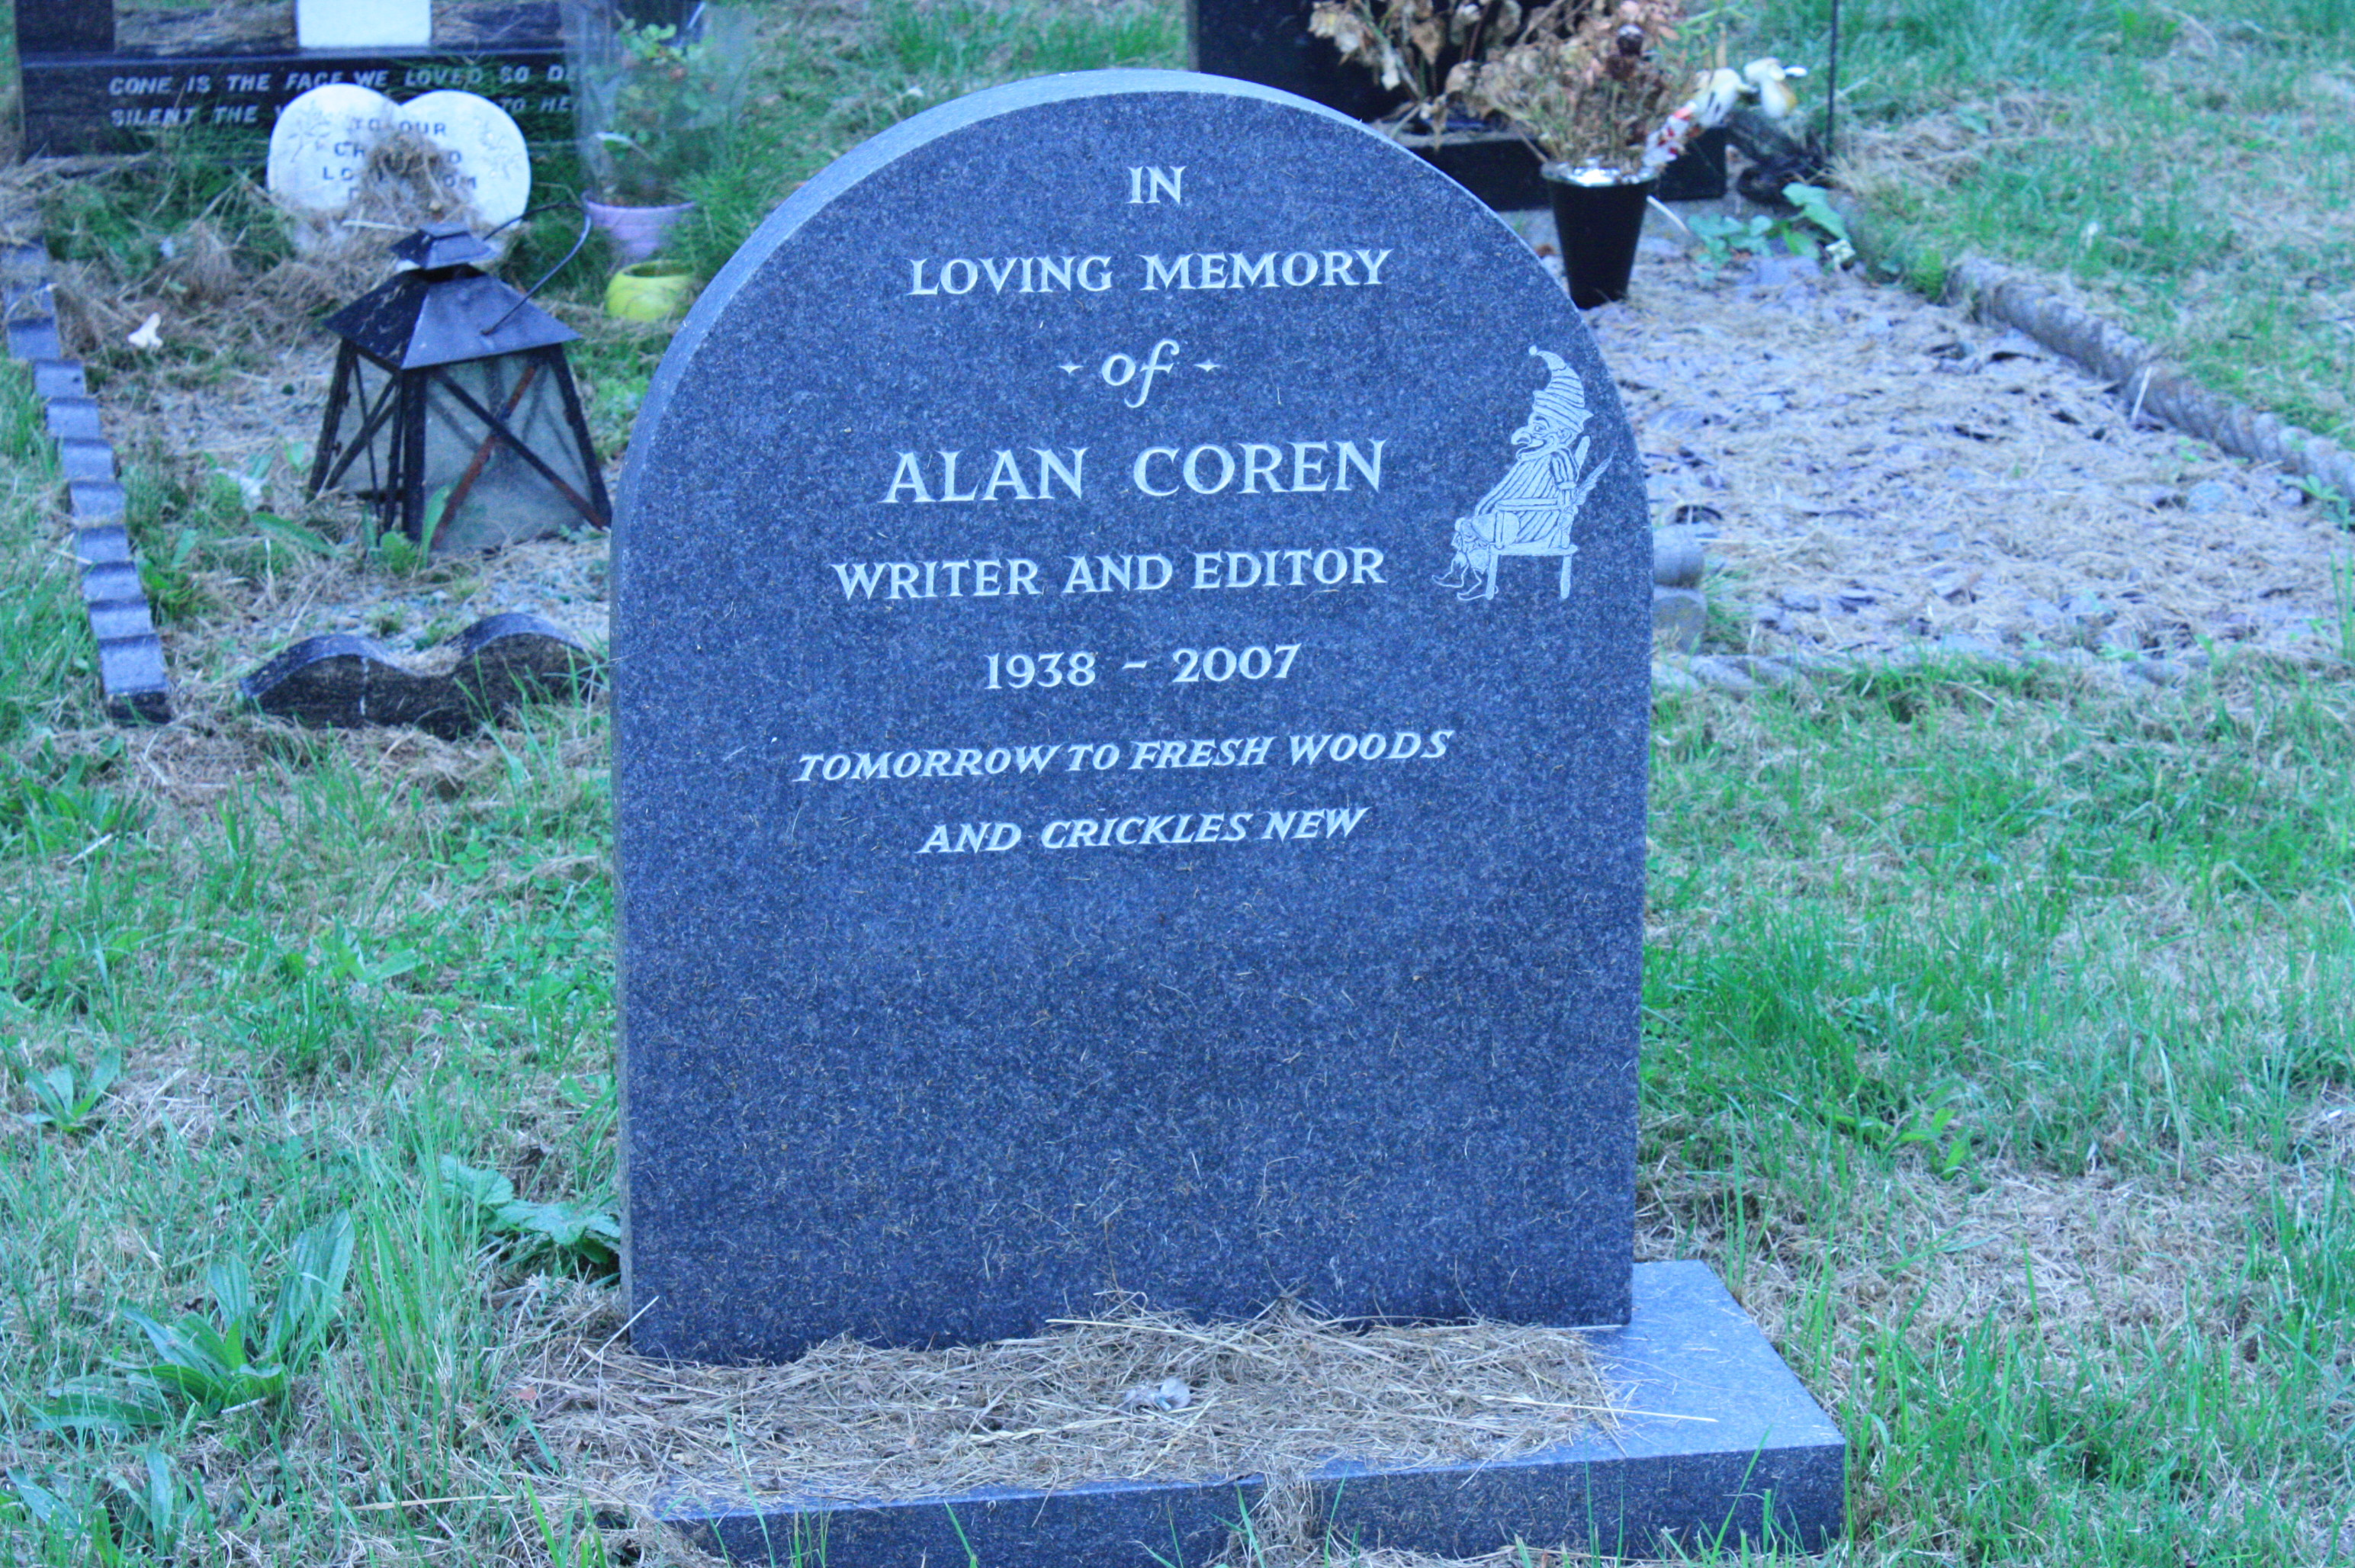 Alan Coren